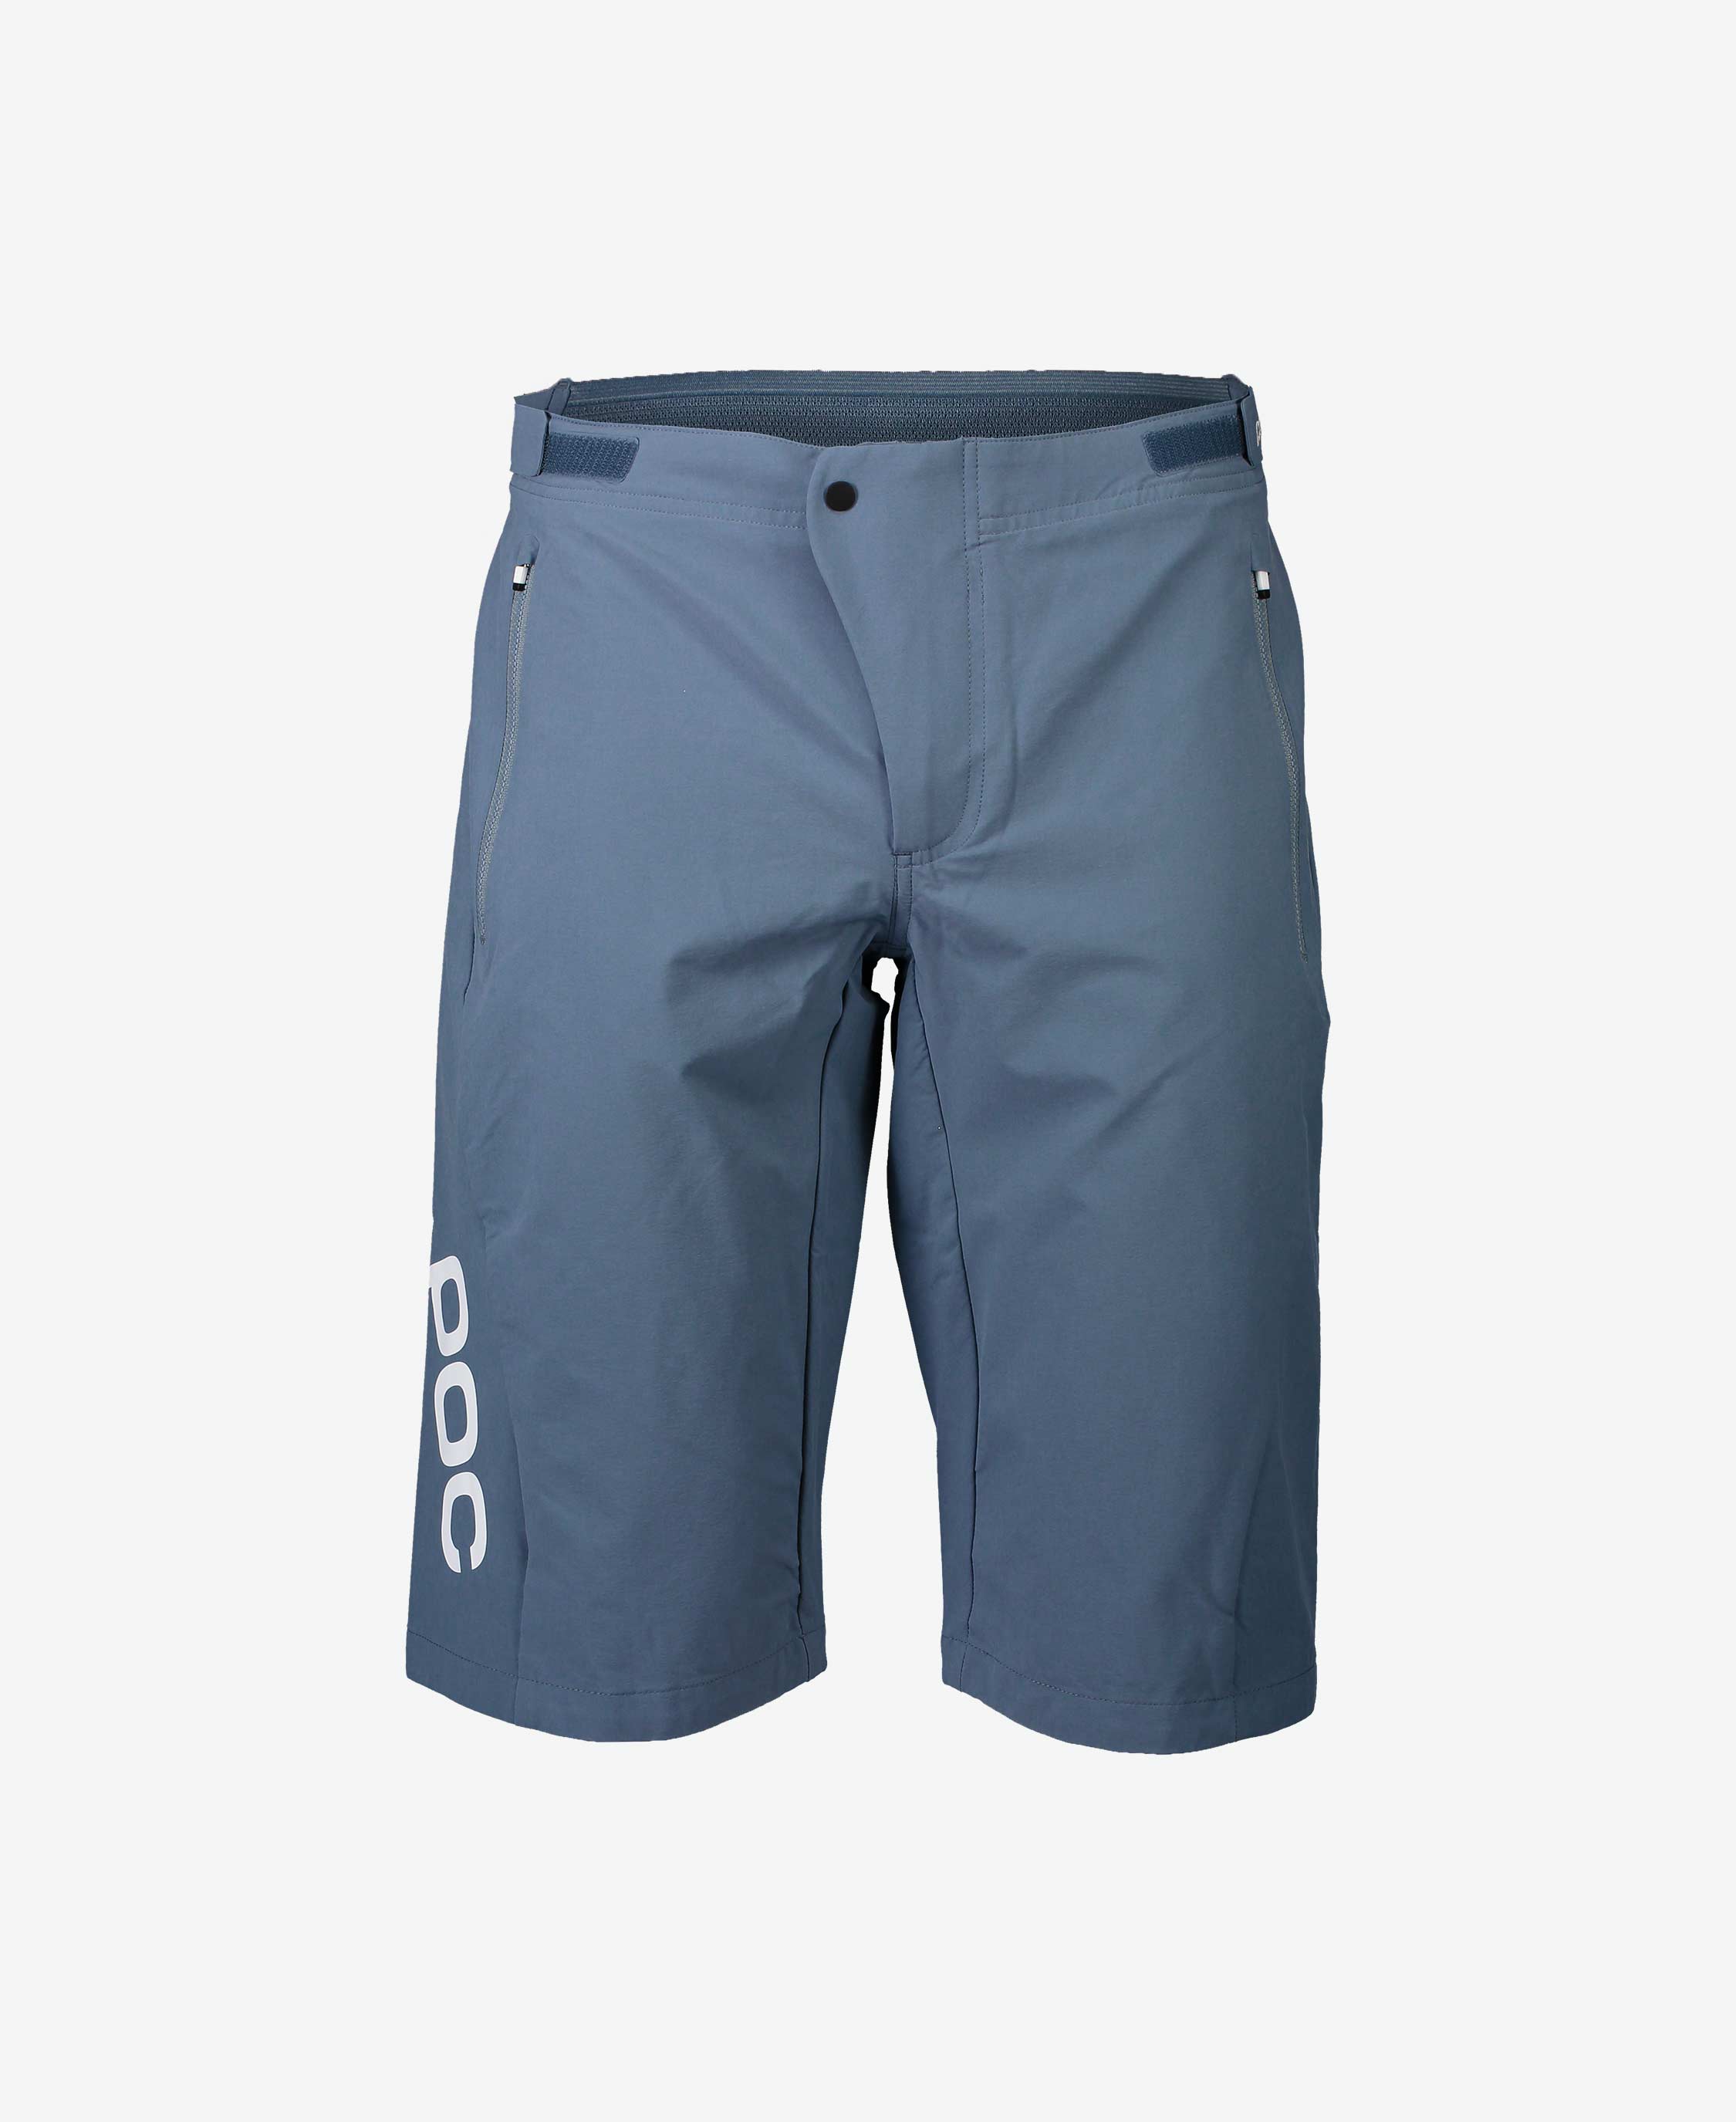 poc essential enduro shorts calcite blue